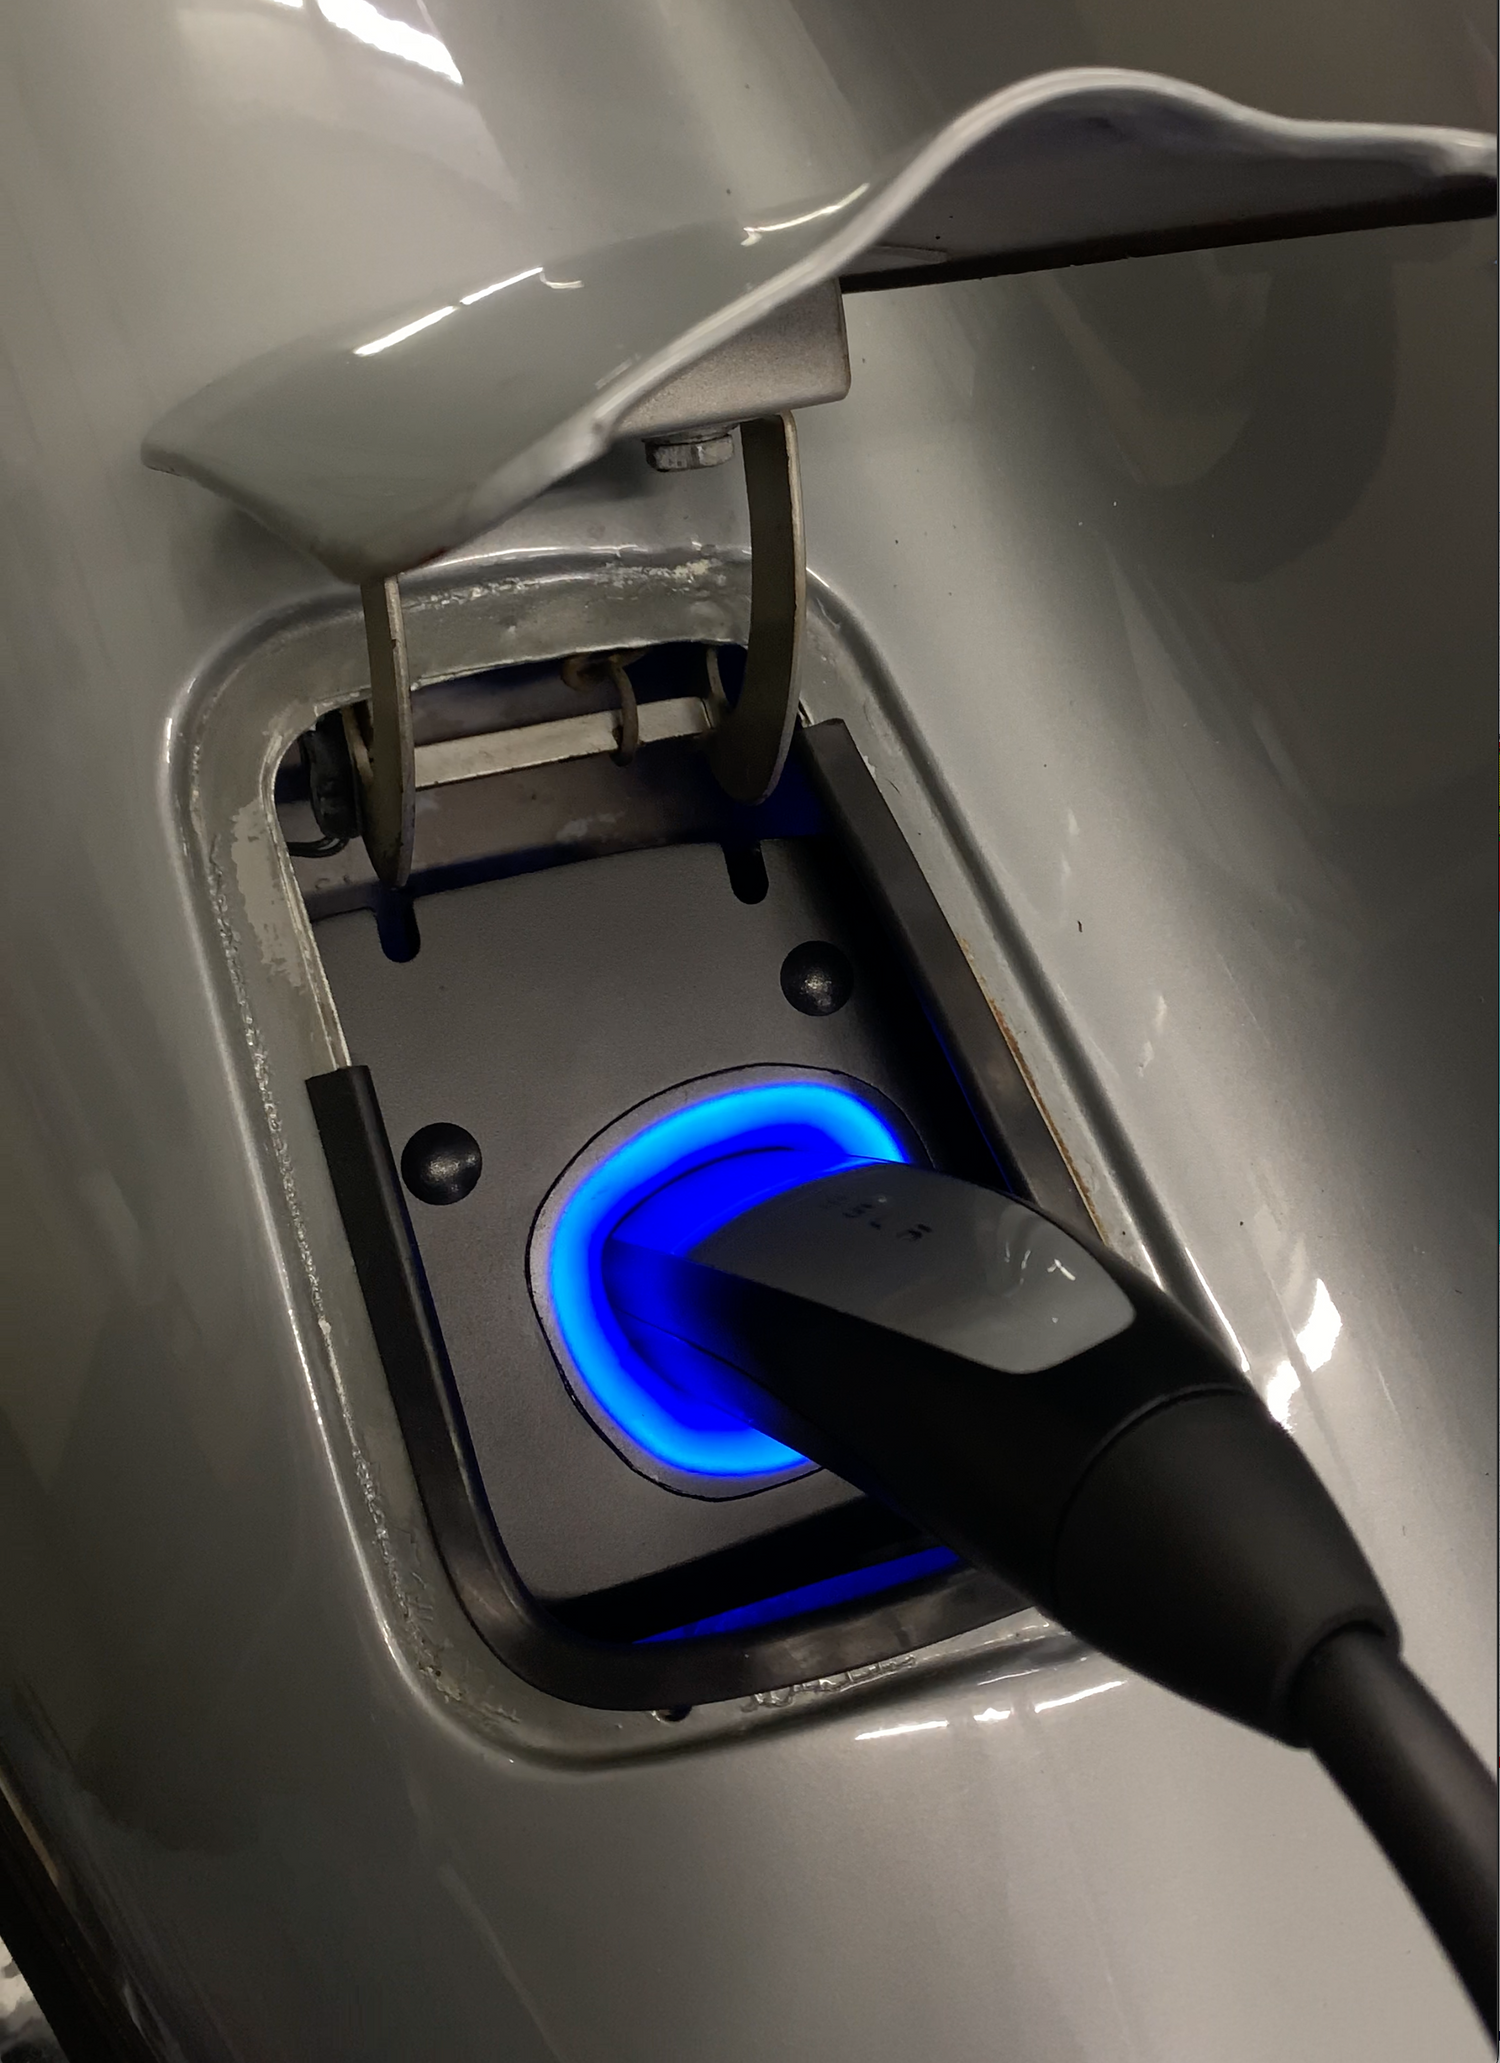 Image of blue charge port light